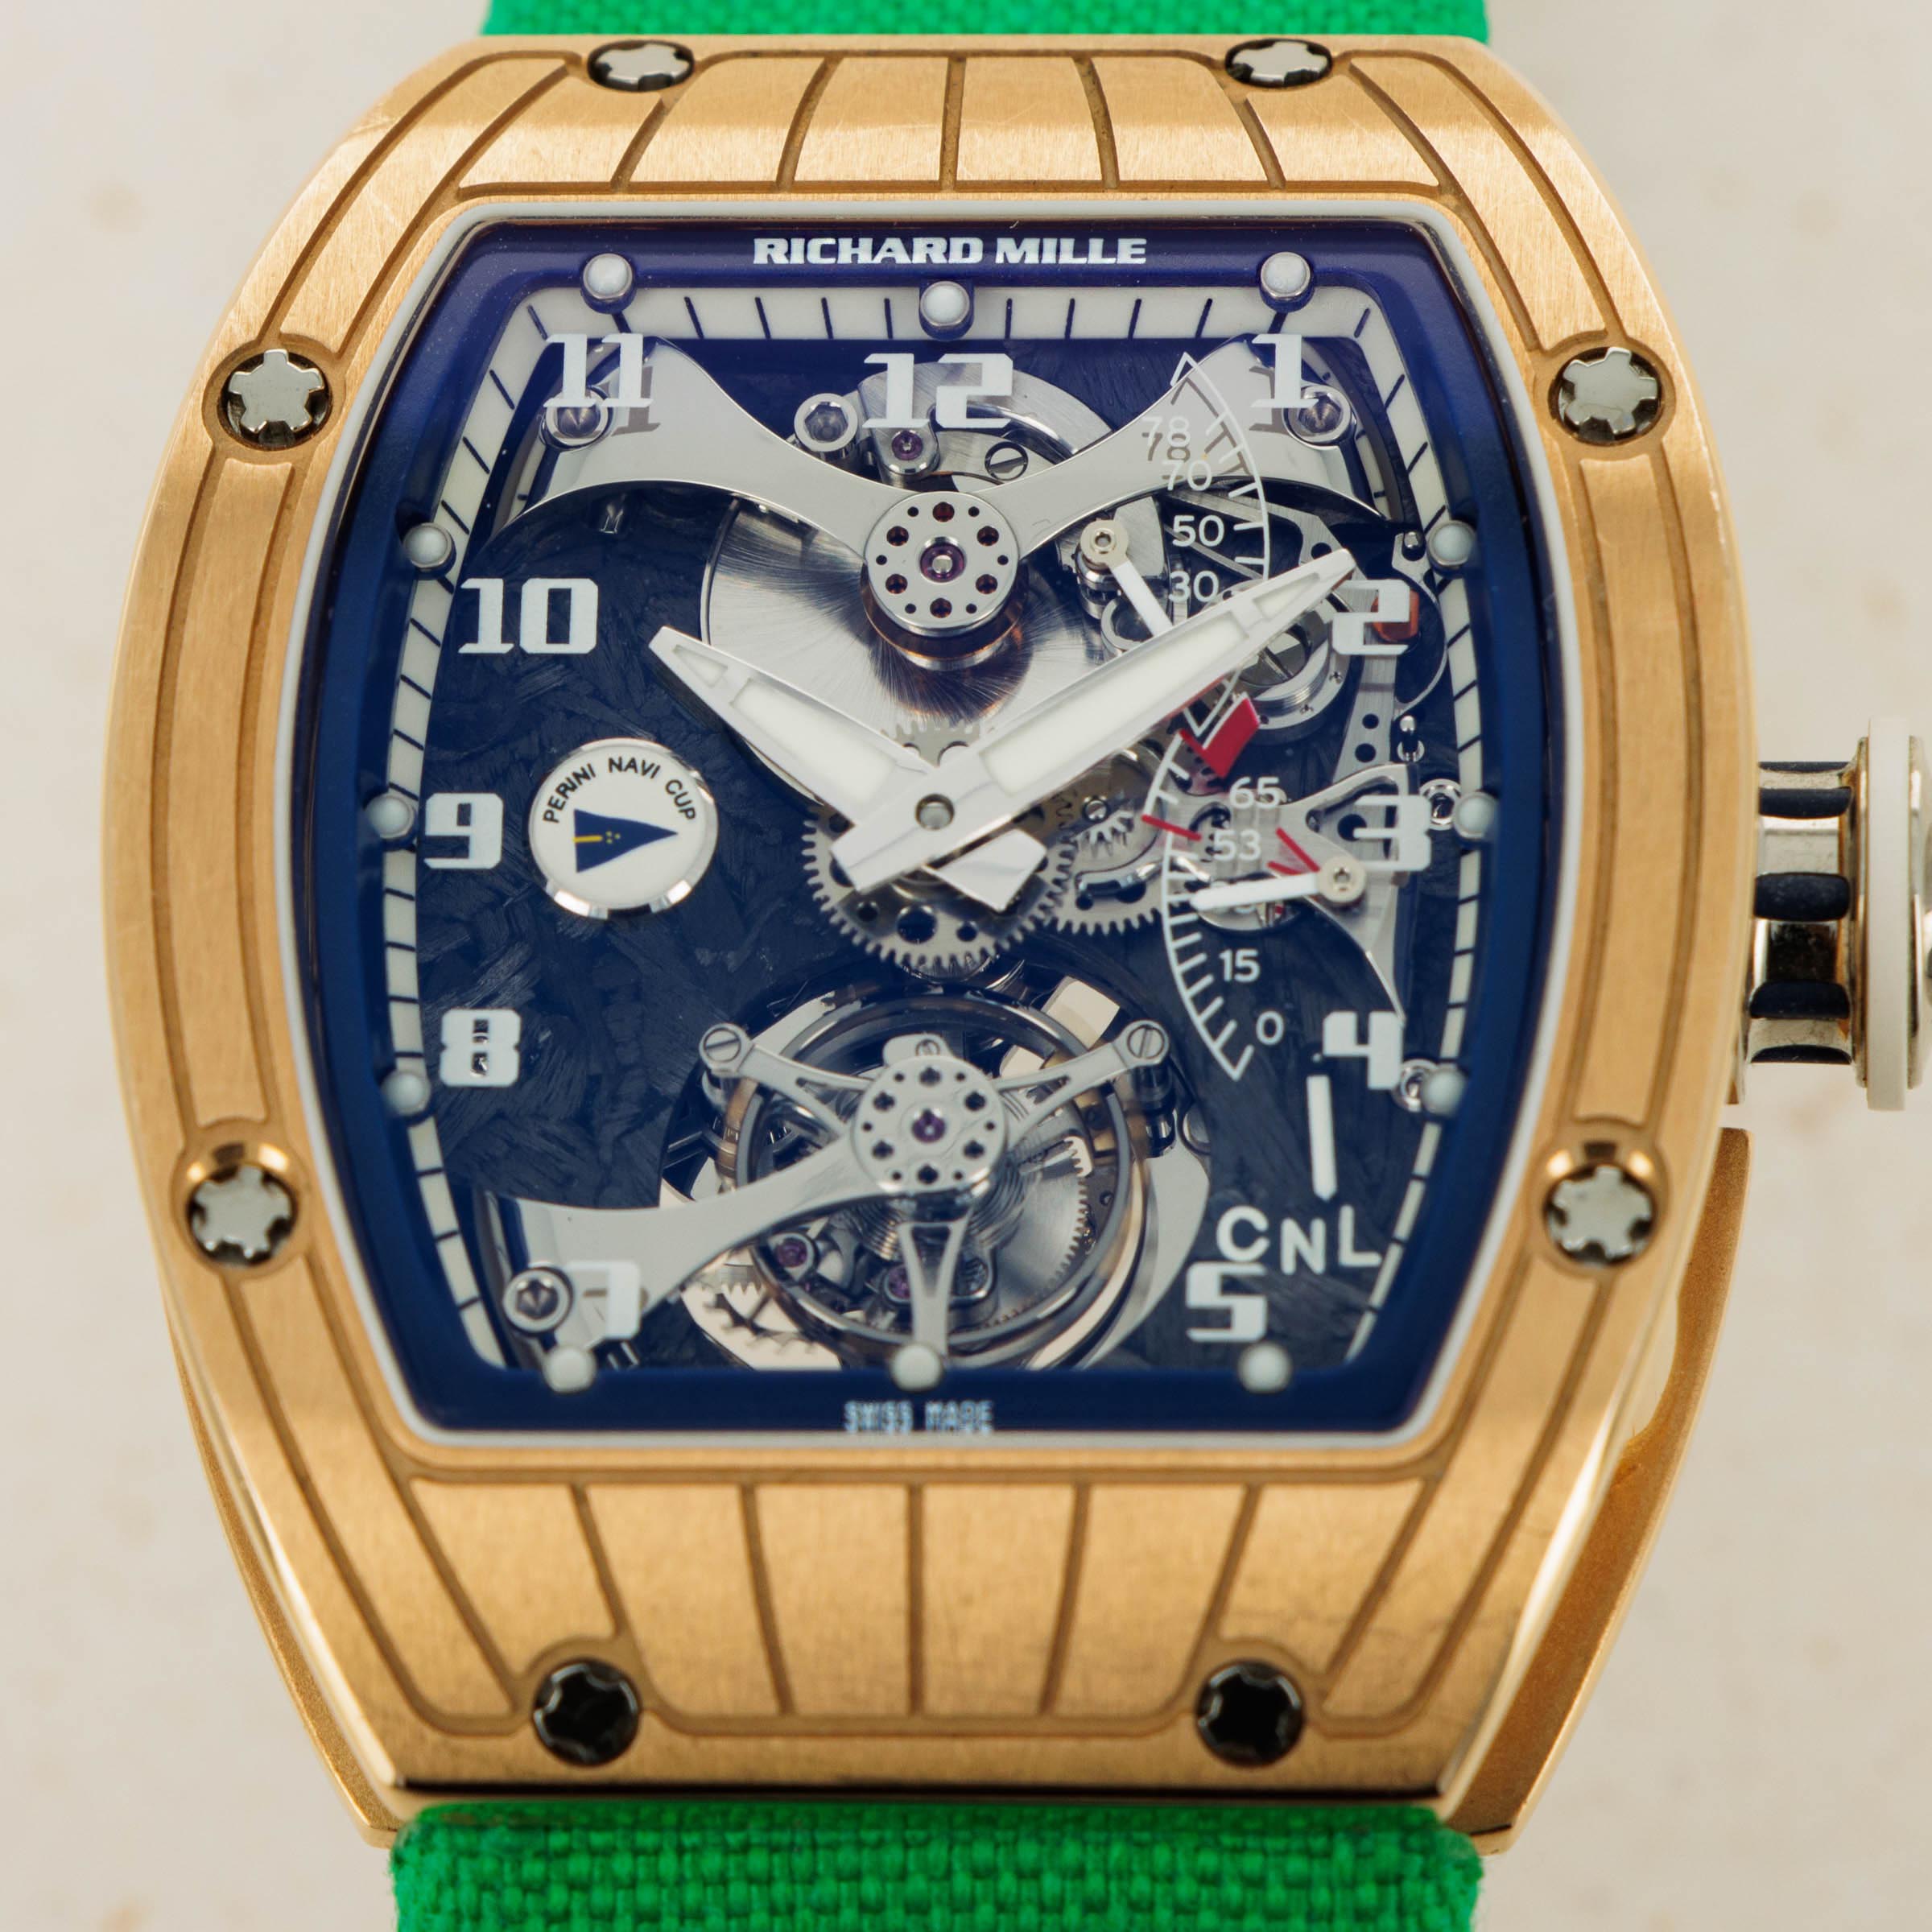 [20] Assorted Woman's Wrist Watches: Citizen, Alsra, Perini, Acqua, Timex,  Sergi - NK Industries LTD